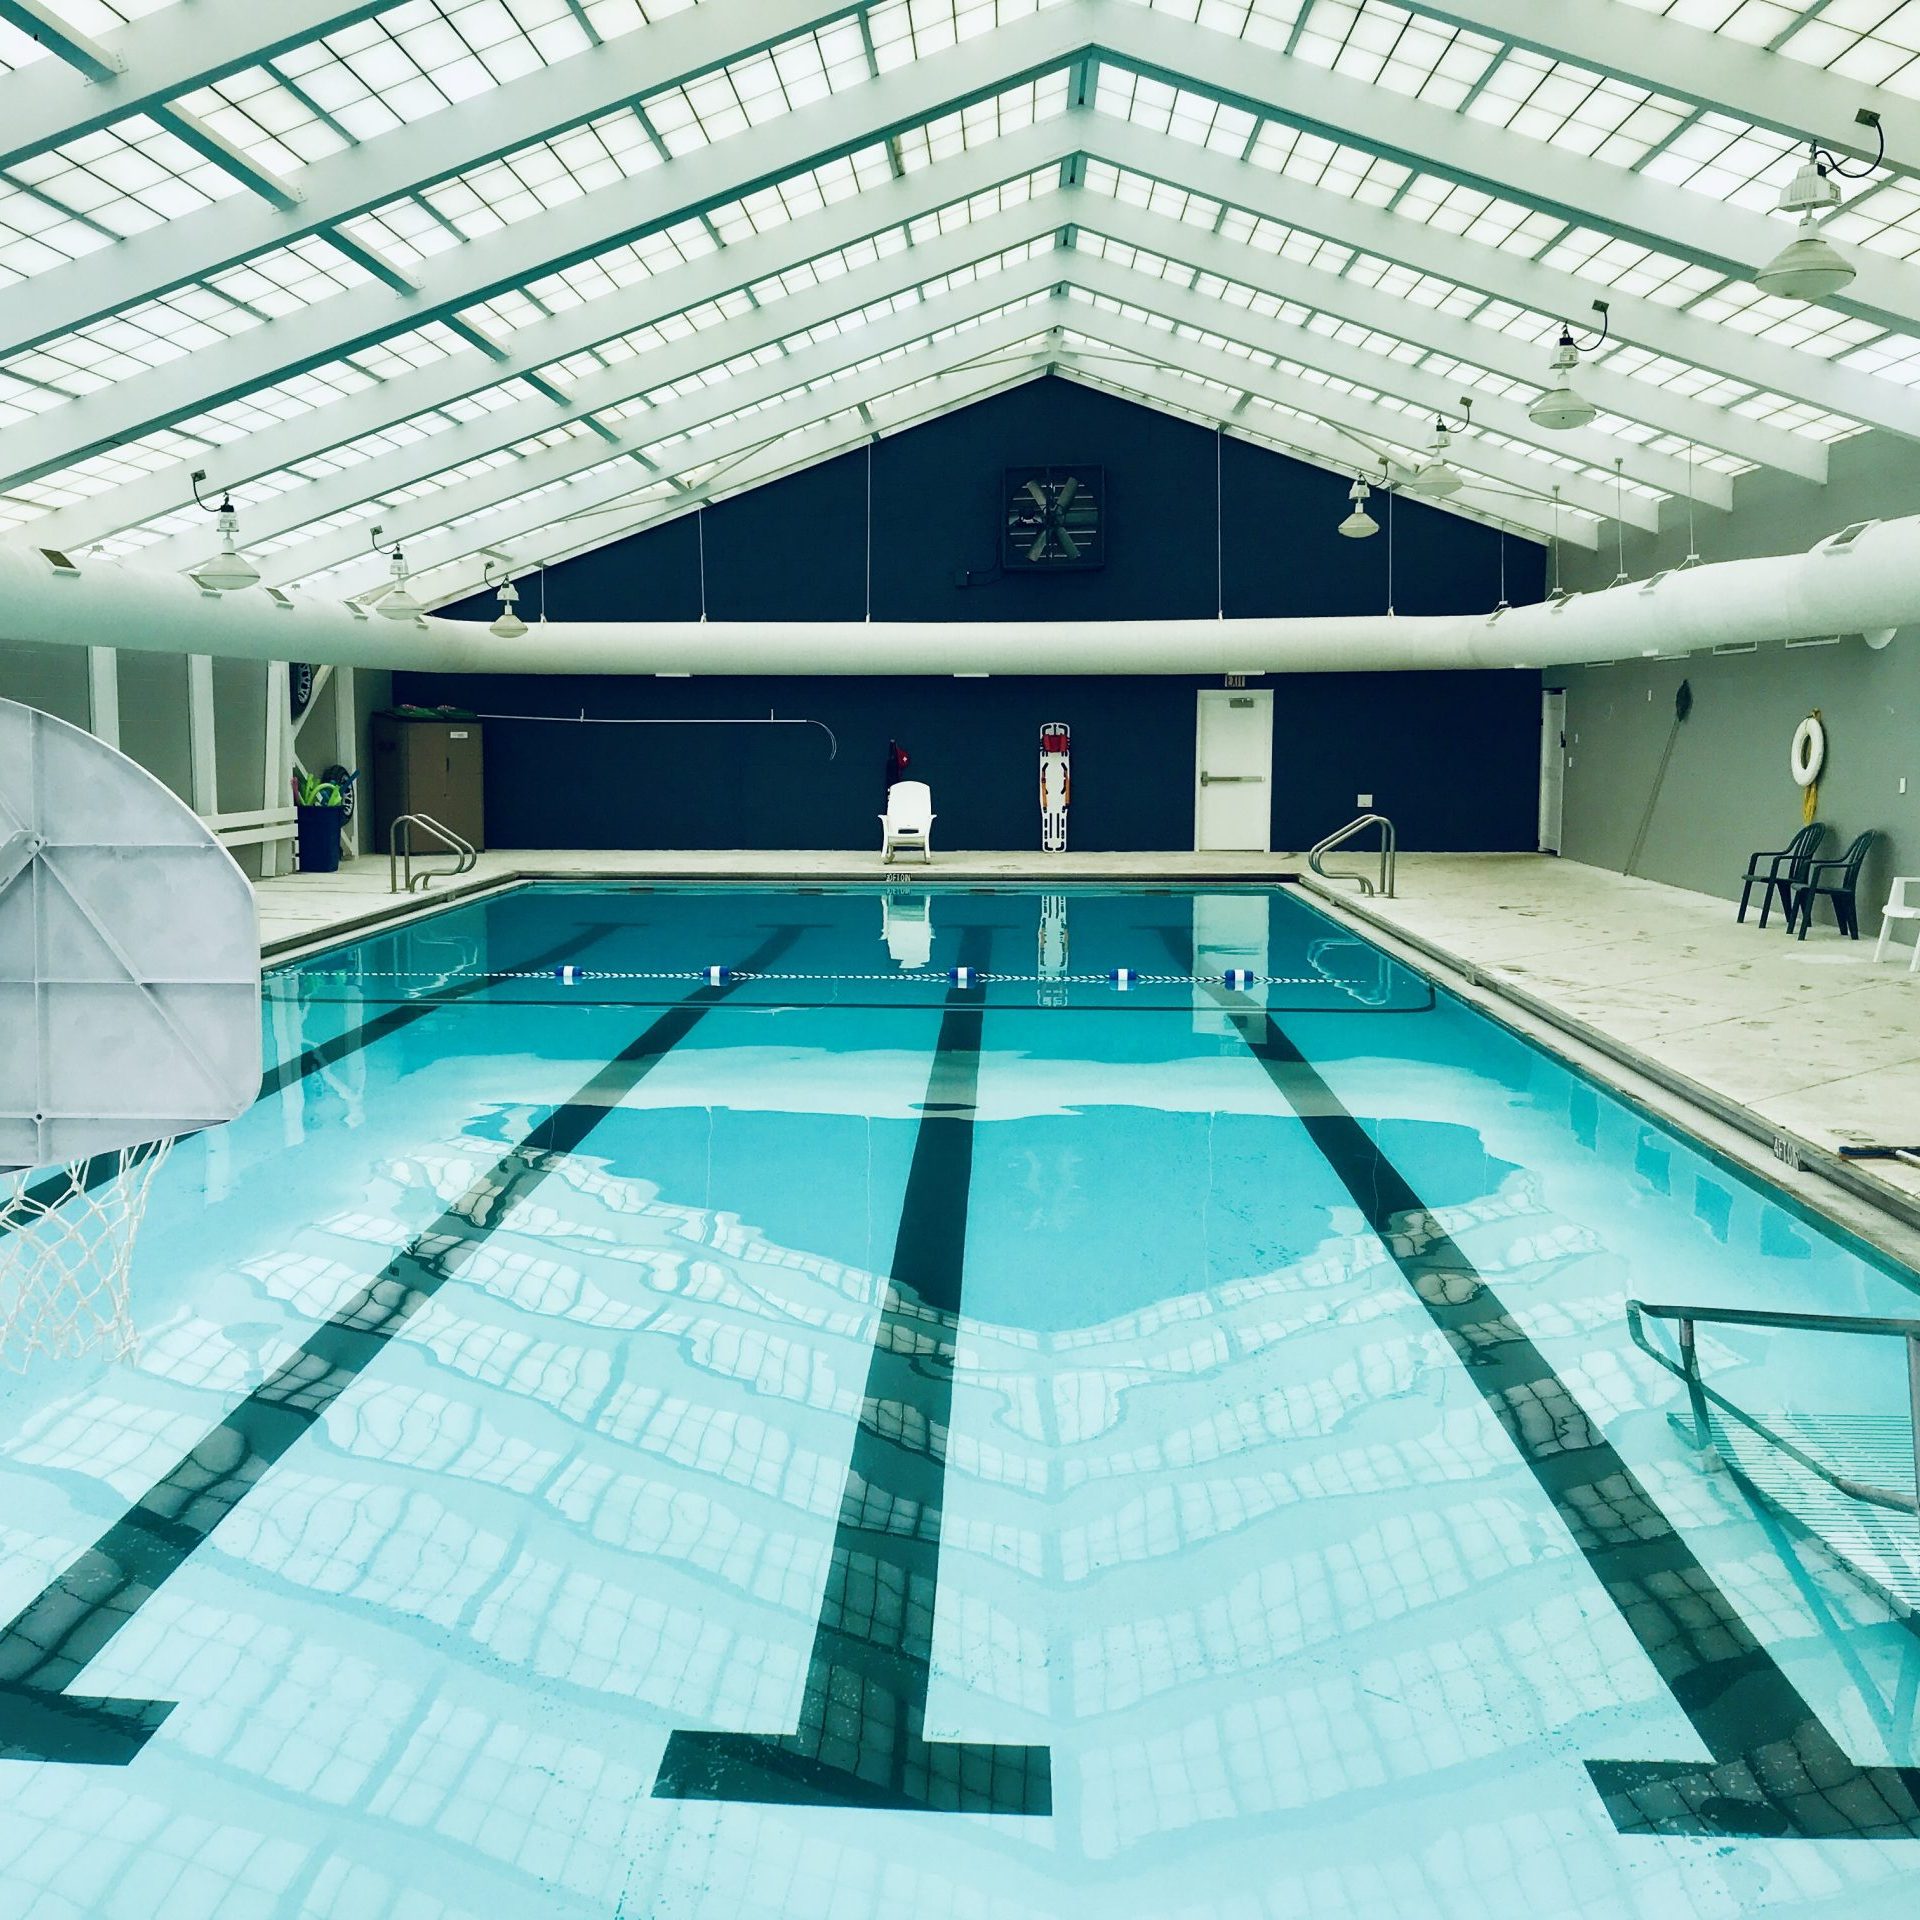 Camp Comeca indoor swimming pool